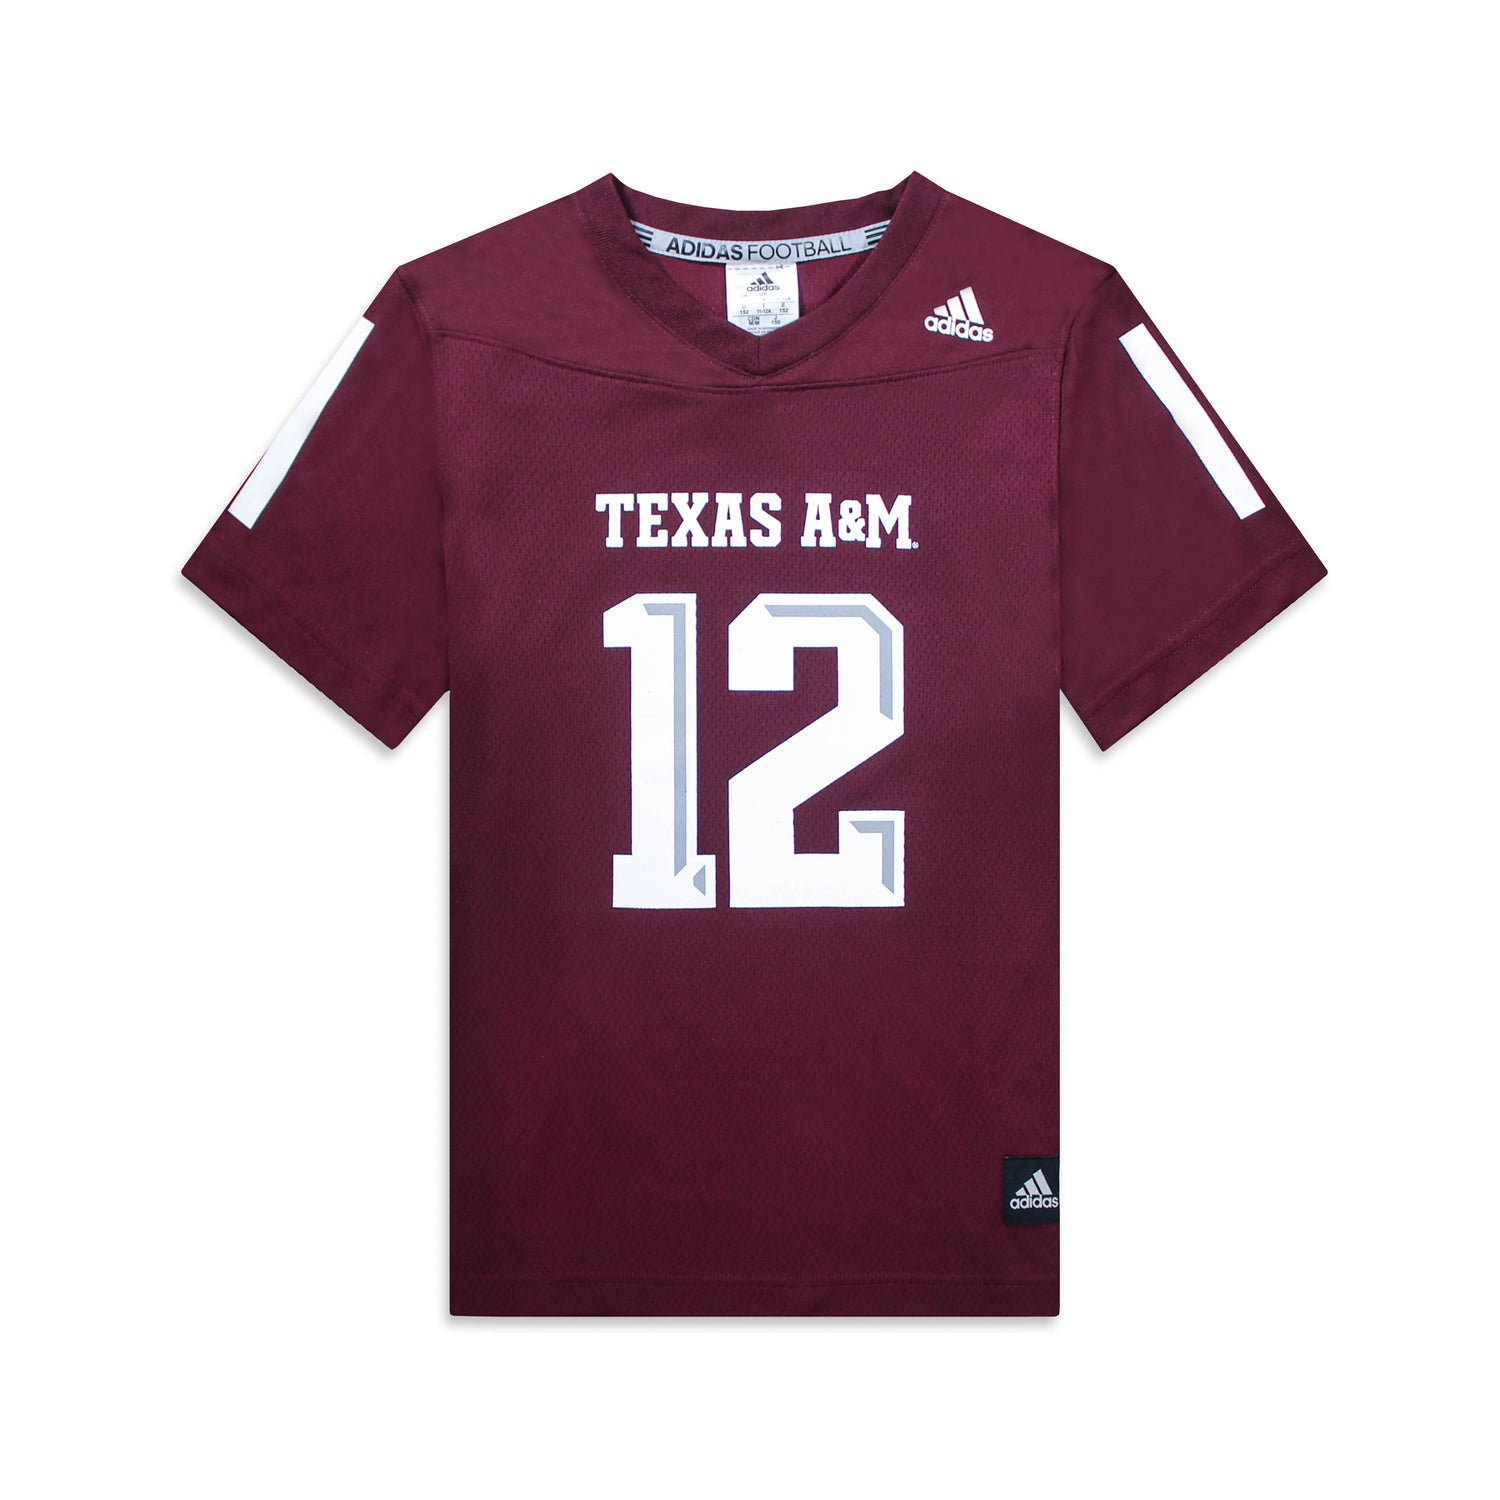 Texas A&M Adidas Youth Replica Football Jersey